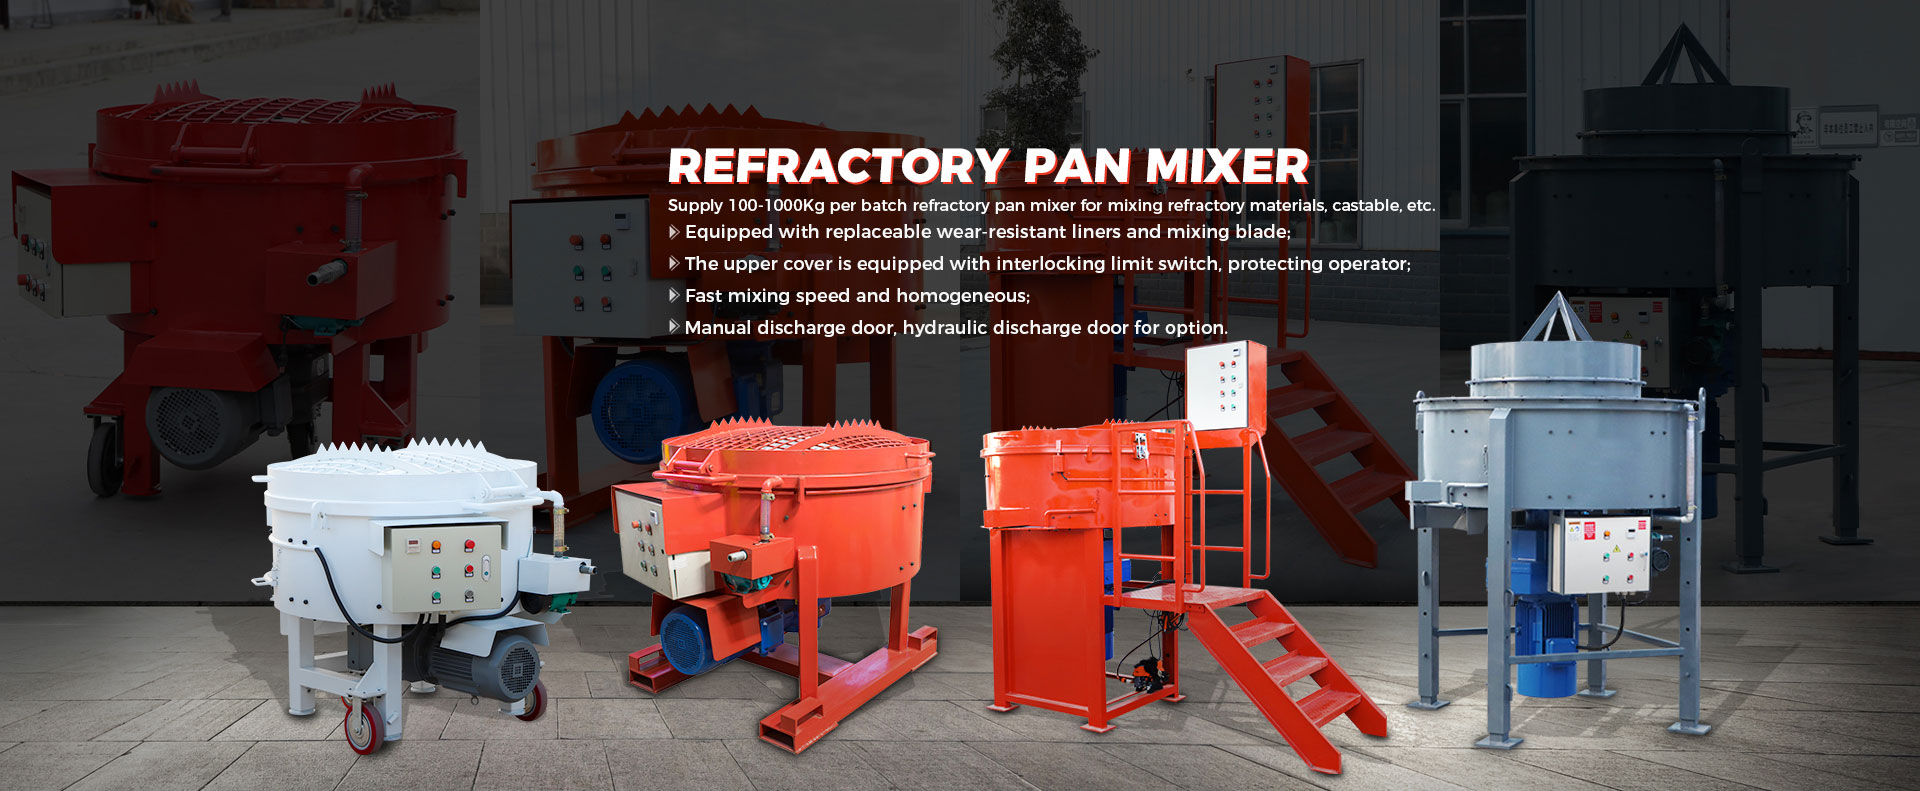 refractory pan mixer for sale